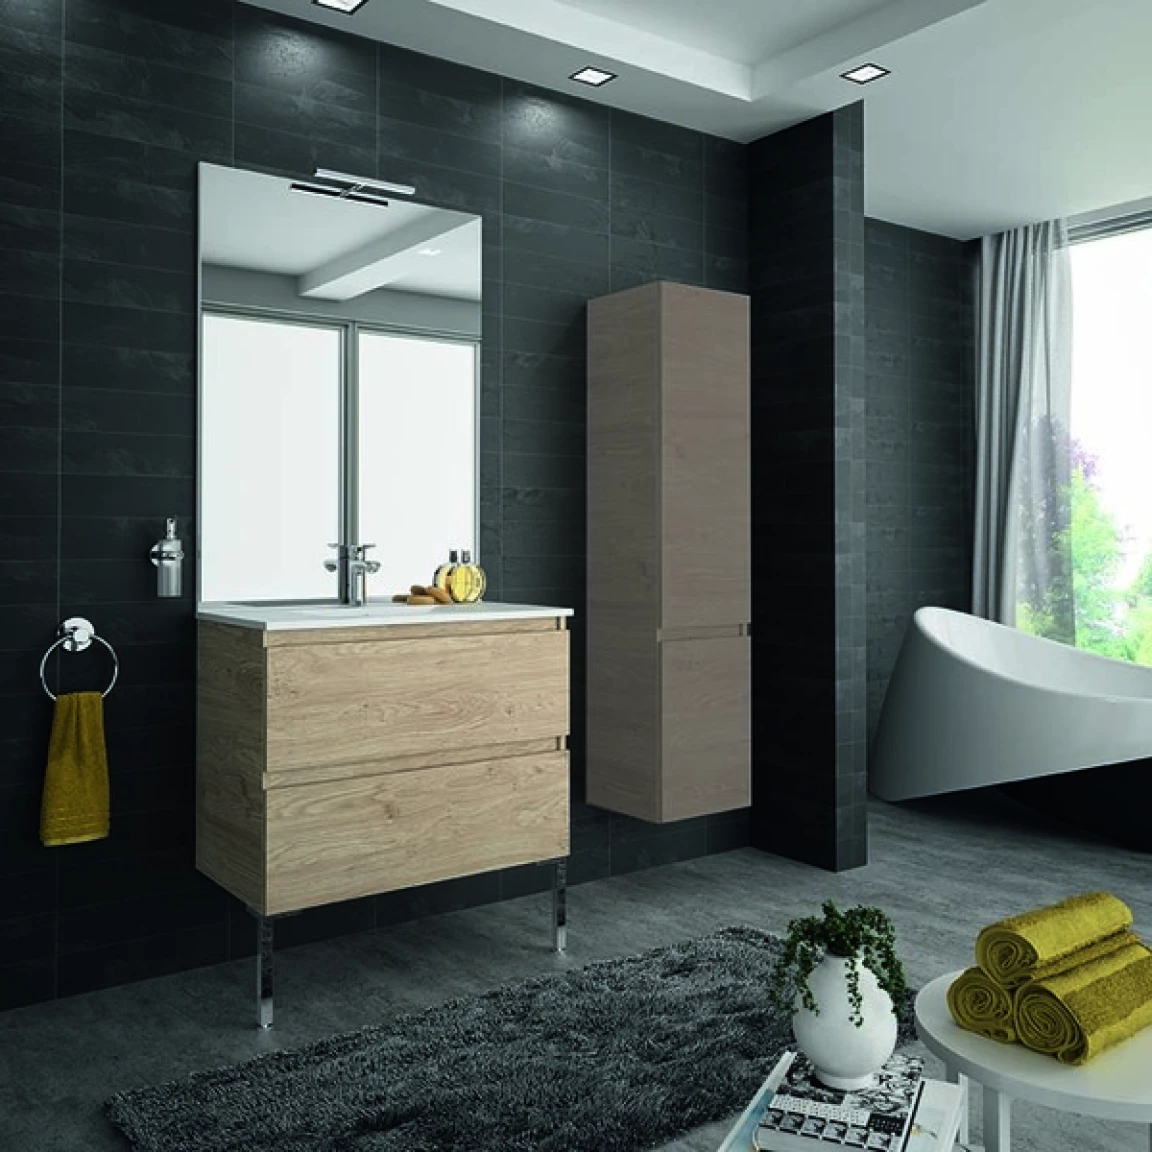 Ensemble meuble de salle de bain CAMPUS 90 cm, plan vasque céramique, profondeur 130 mm, miroir hauteur 60 cm, béton vulcano, 2 tiroirs